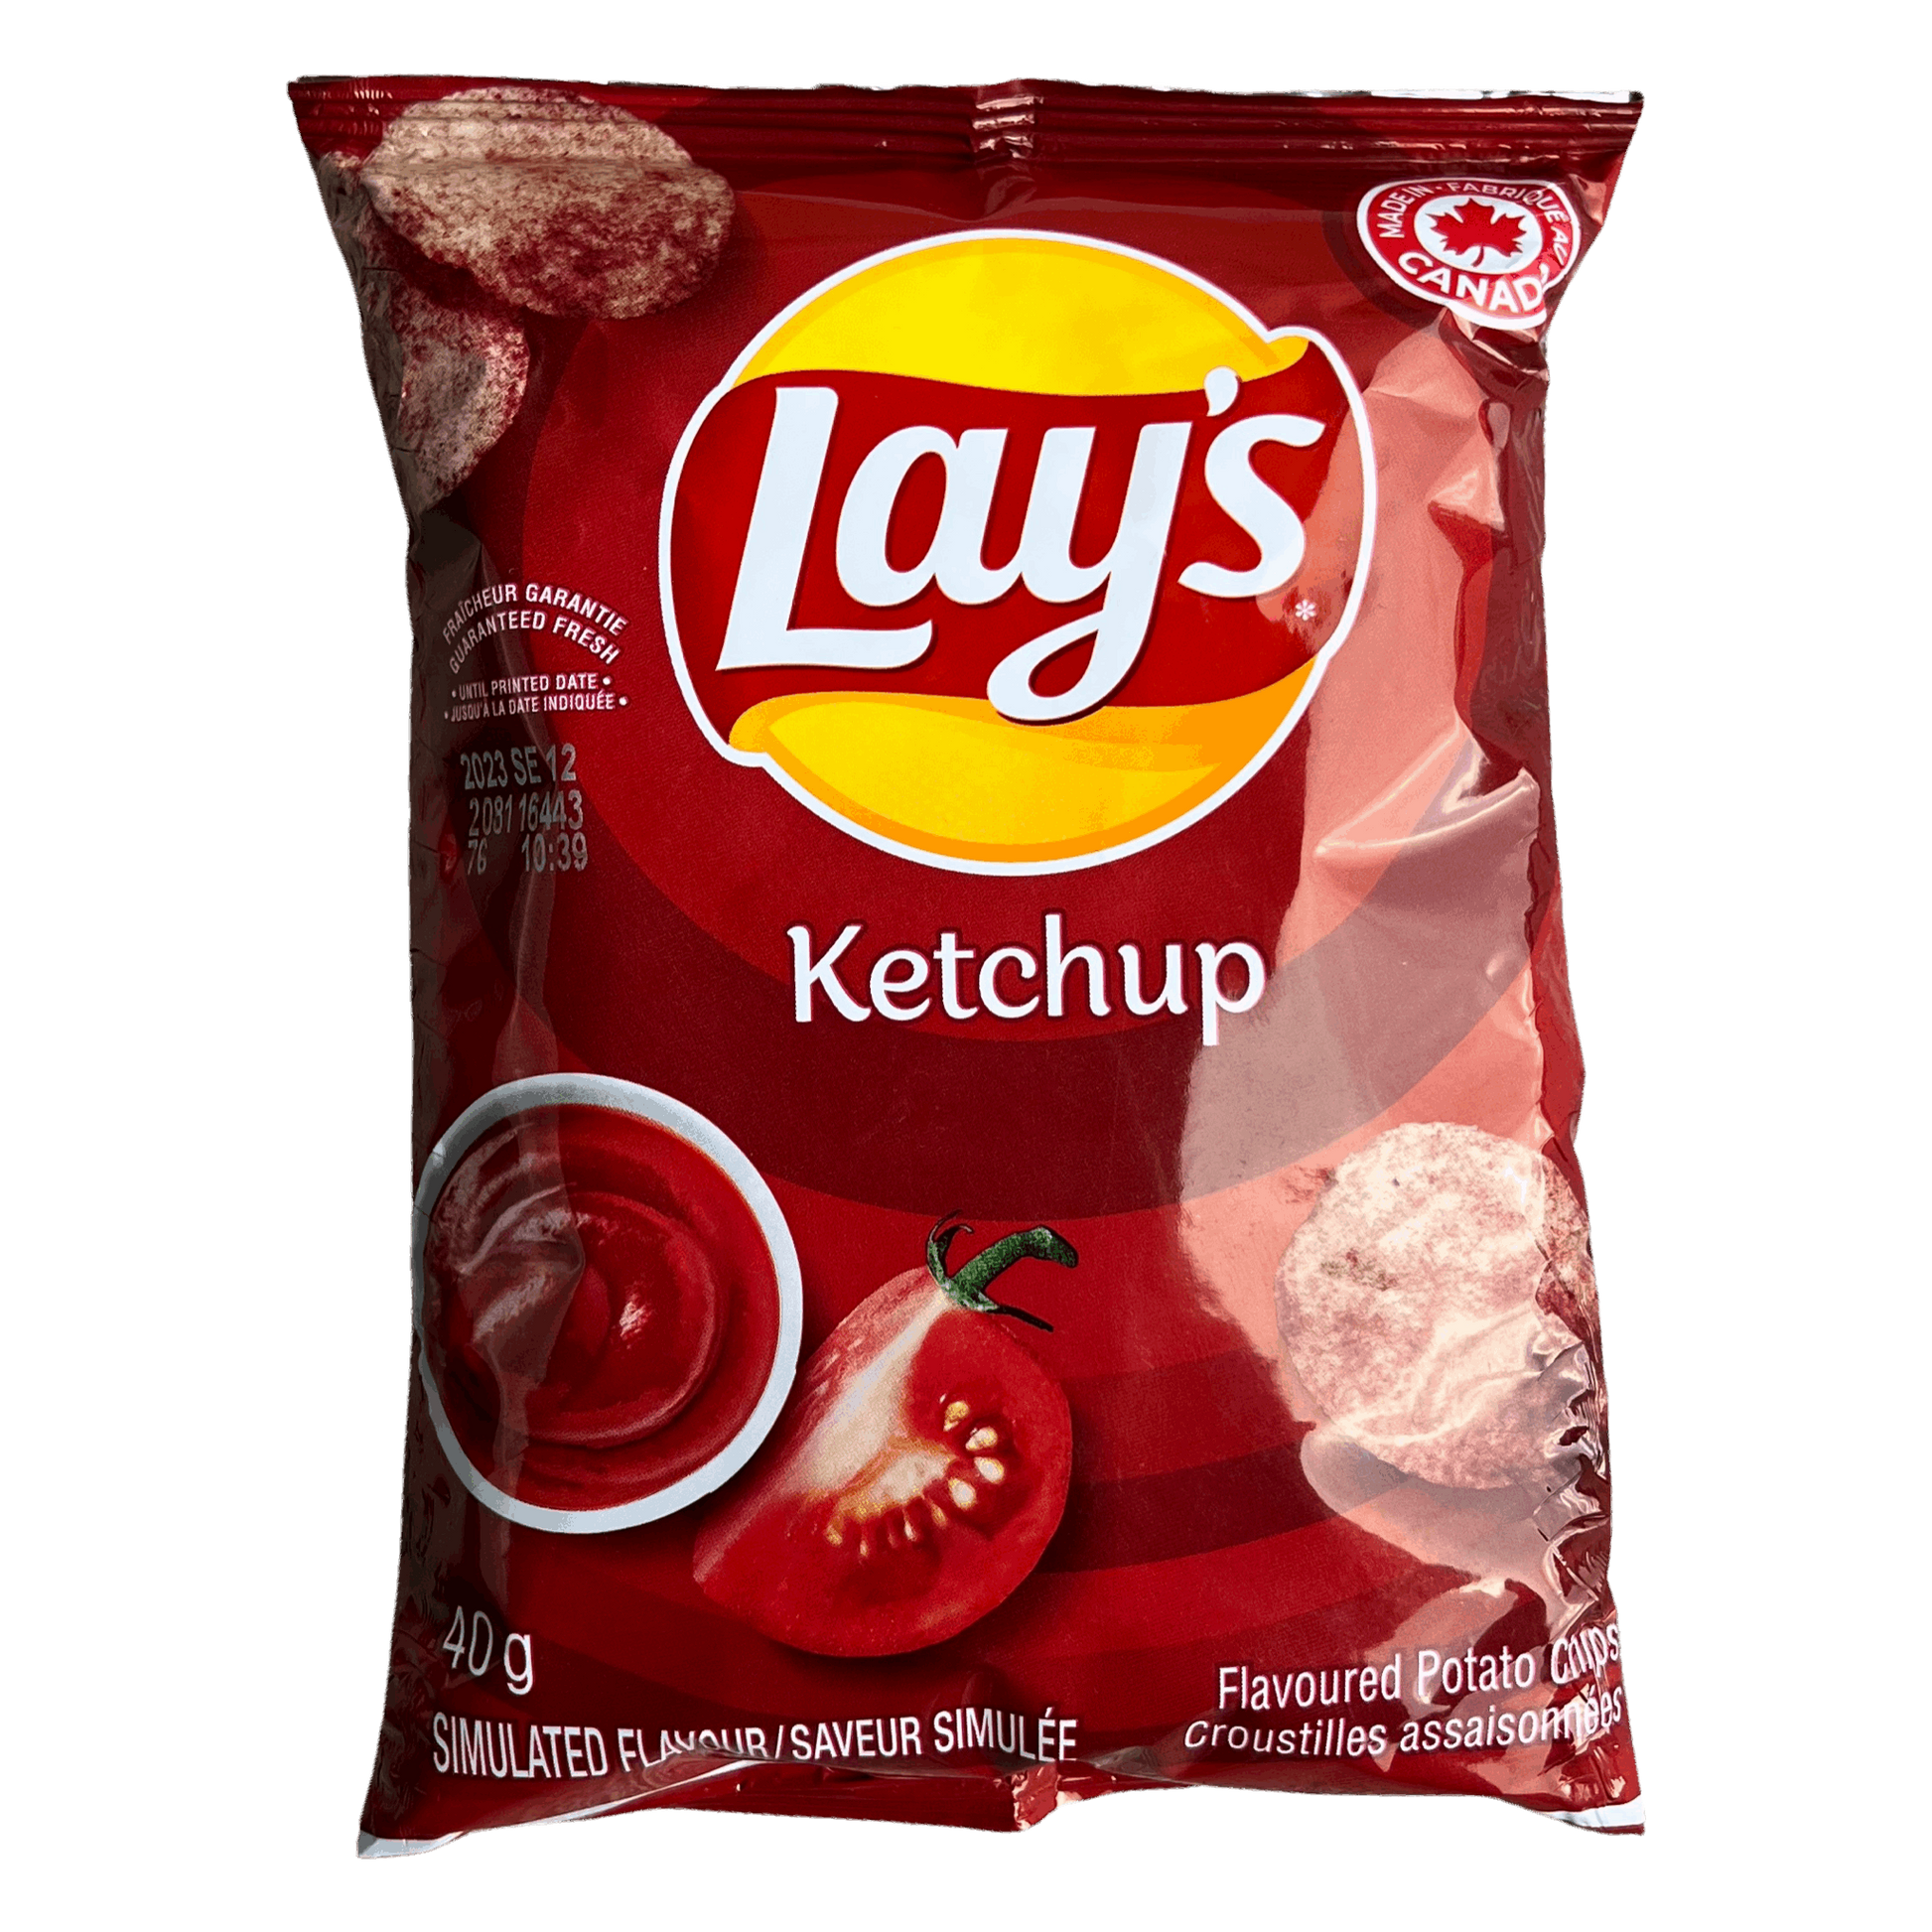 Lays Ketchup Flavor Potato Chips 40g Damaski.com